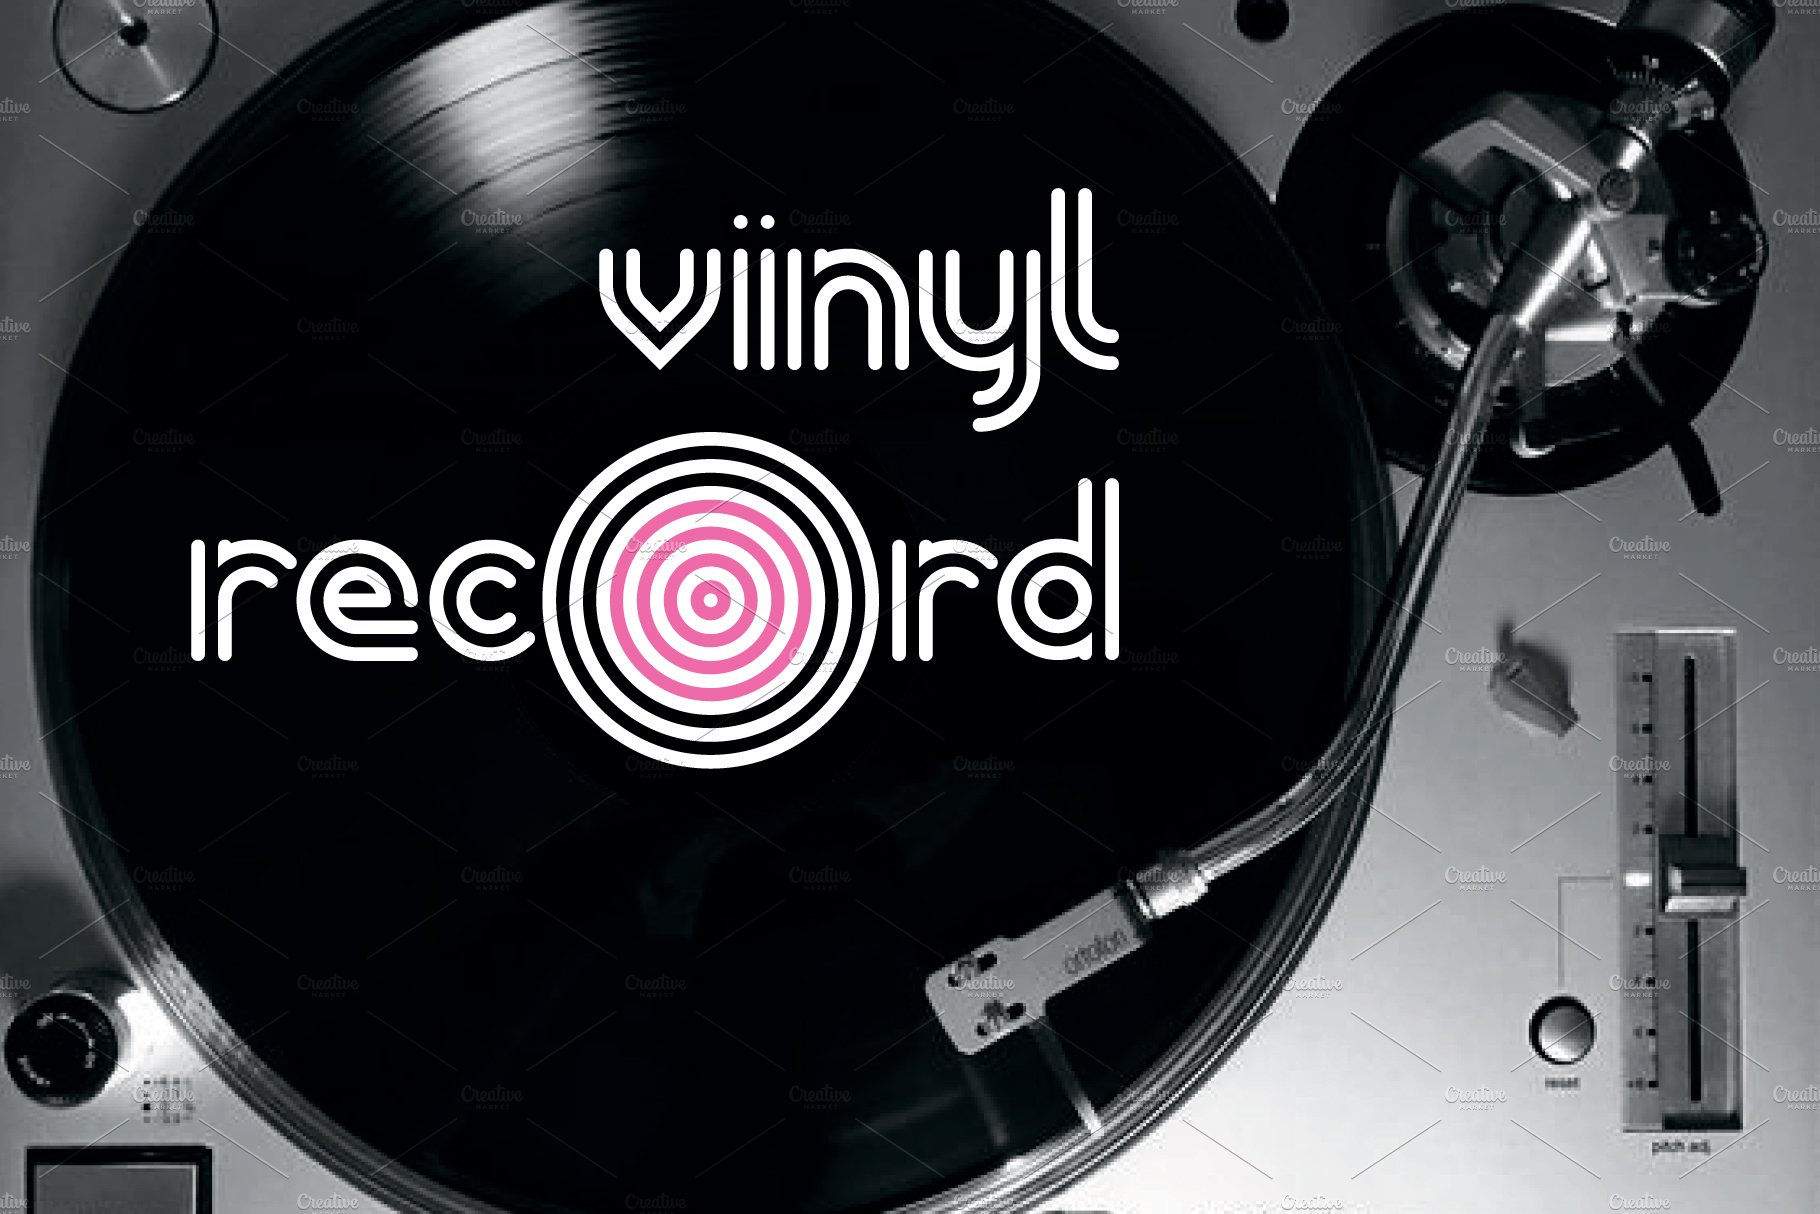 VinylFont preview image.